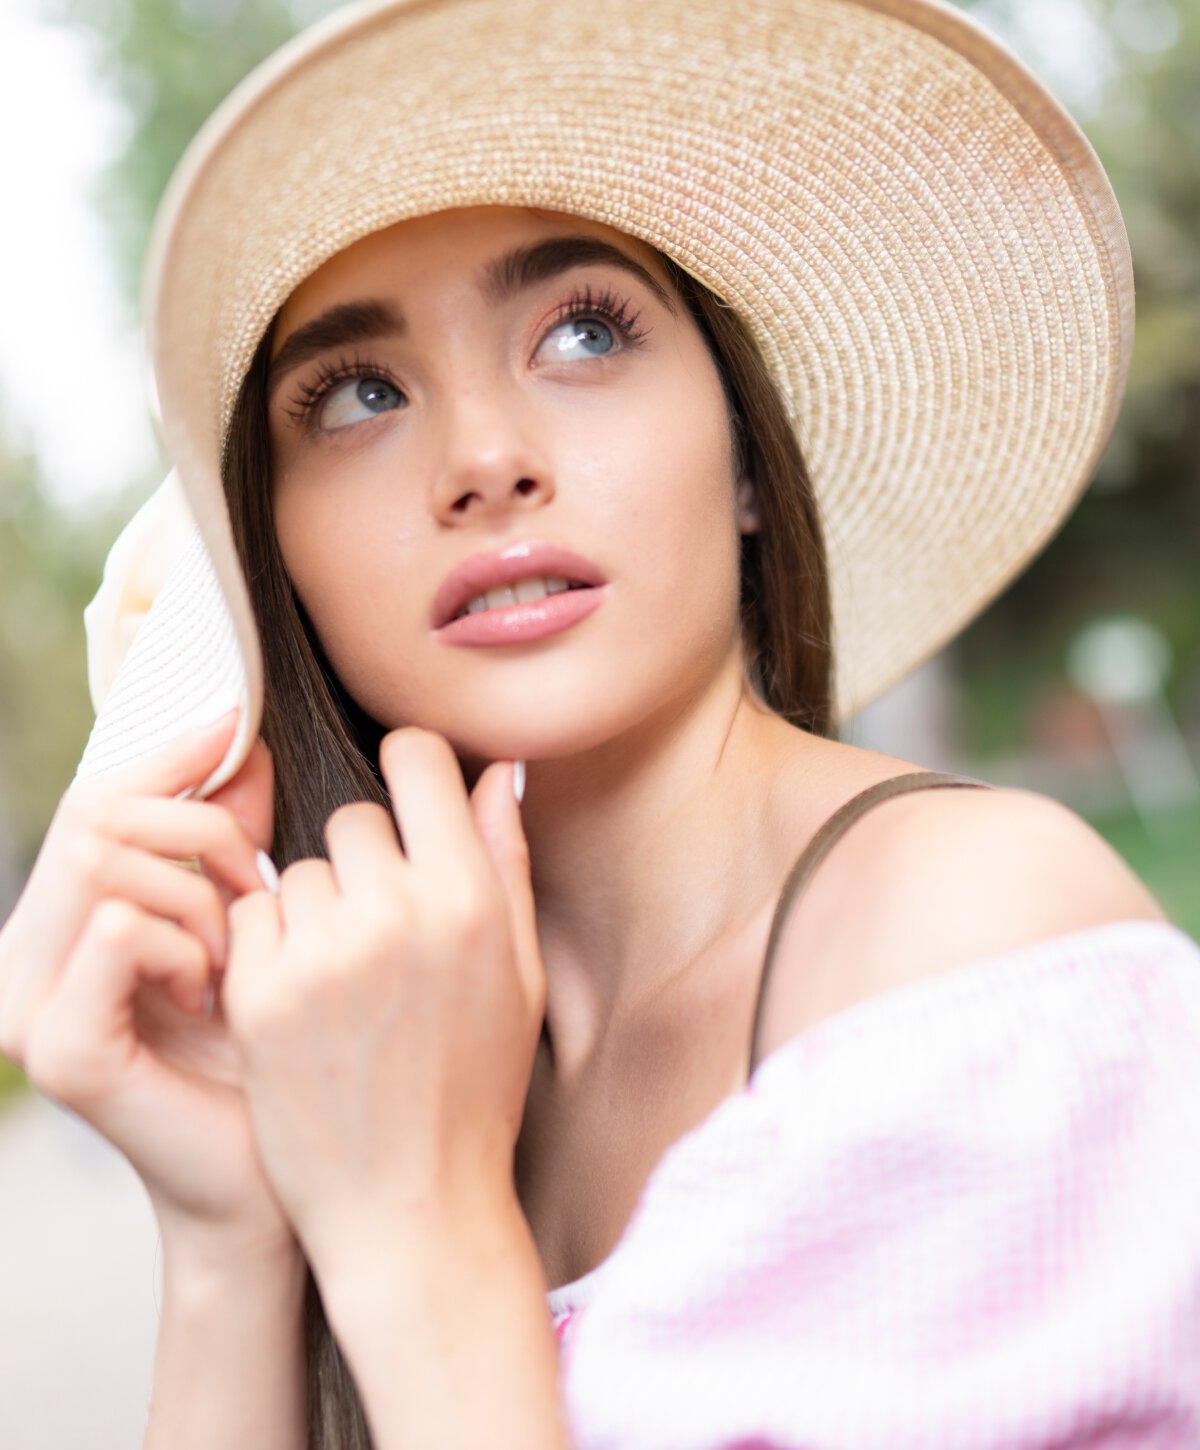 Carolina acne treatment model with tan hat